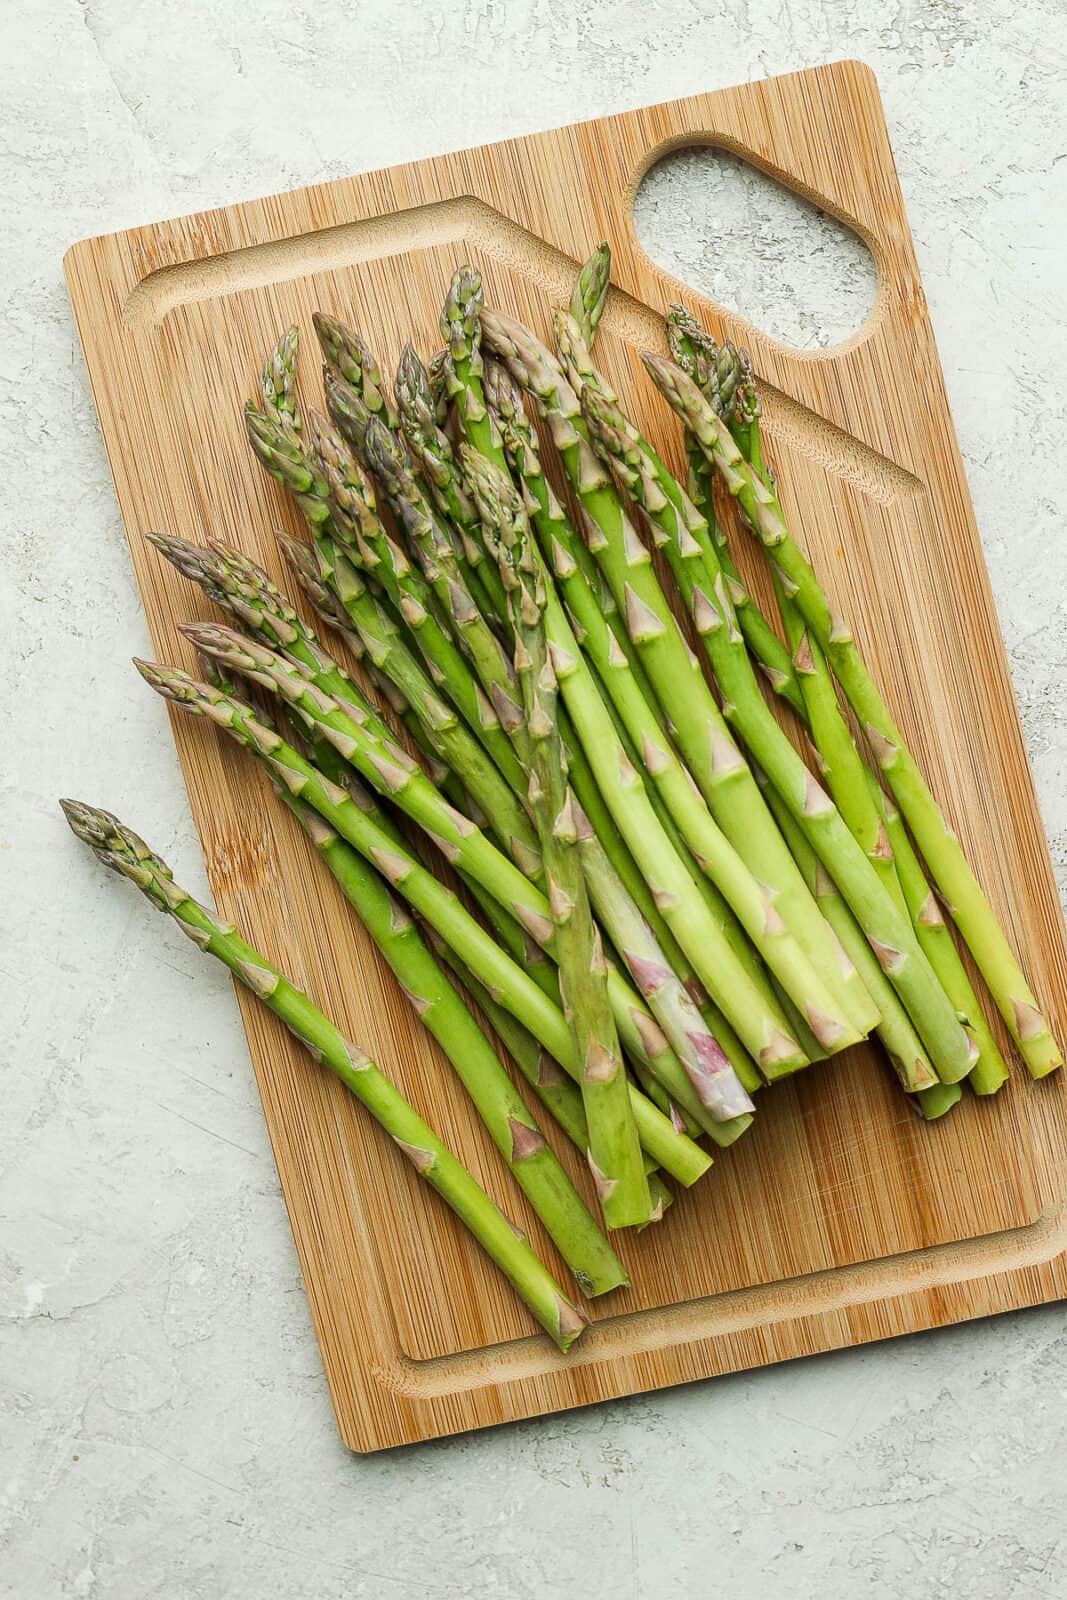 Trimmed asparagus on a wood cutting board.